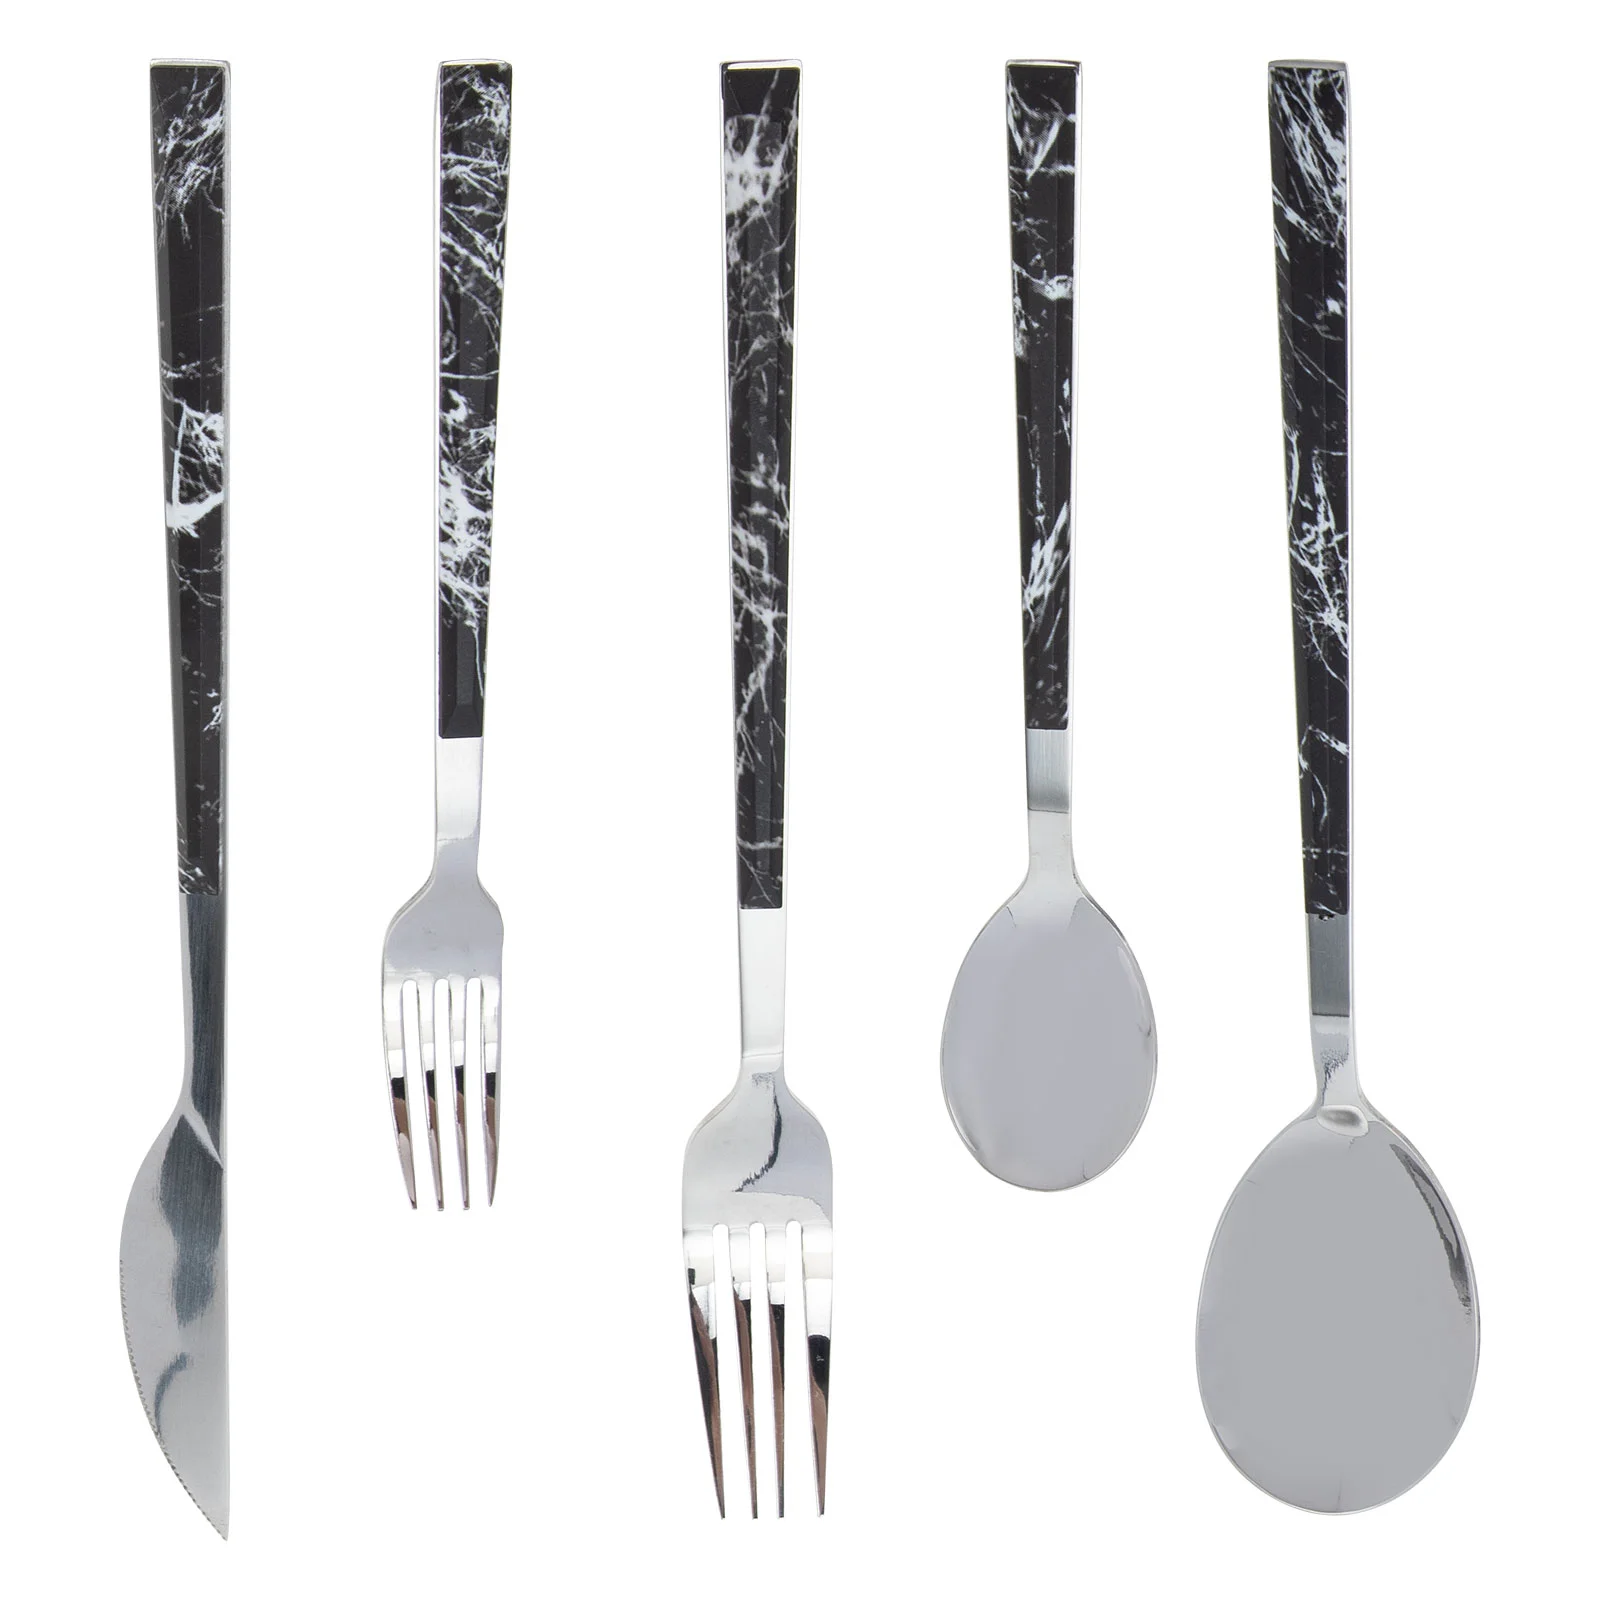 

Set Stainless Steel Spoon Cutlery Fork Spoons Forks Utensils Steak Silverware Flatware Party Tableware Serving Kitchen Gadgets